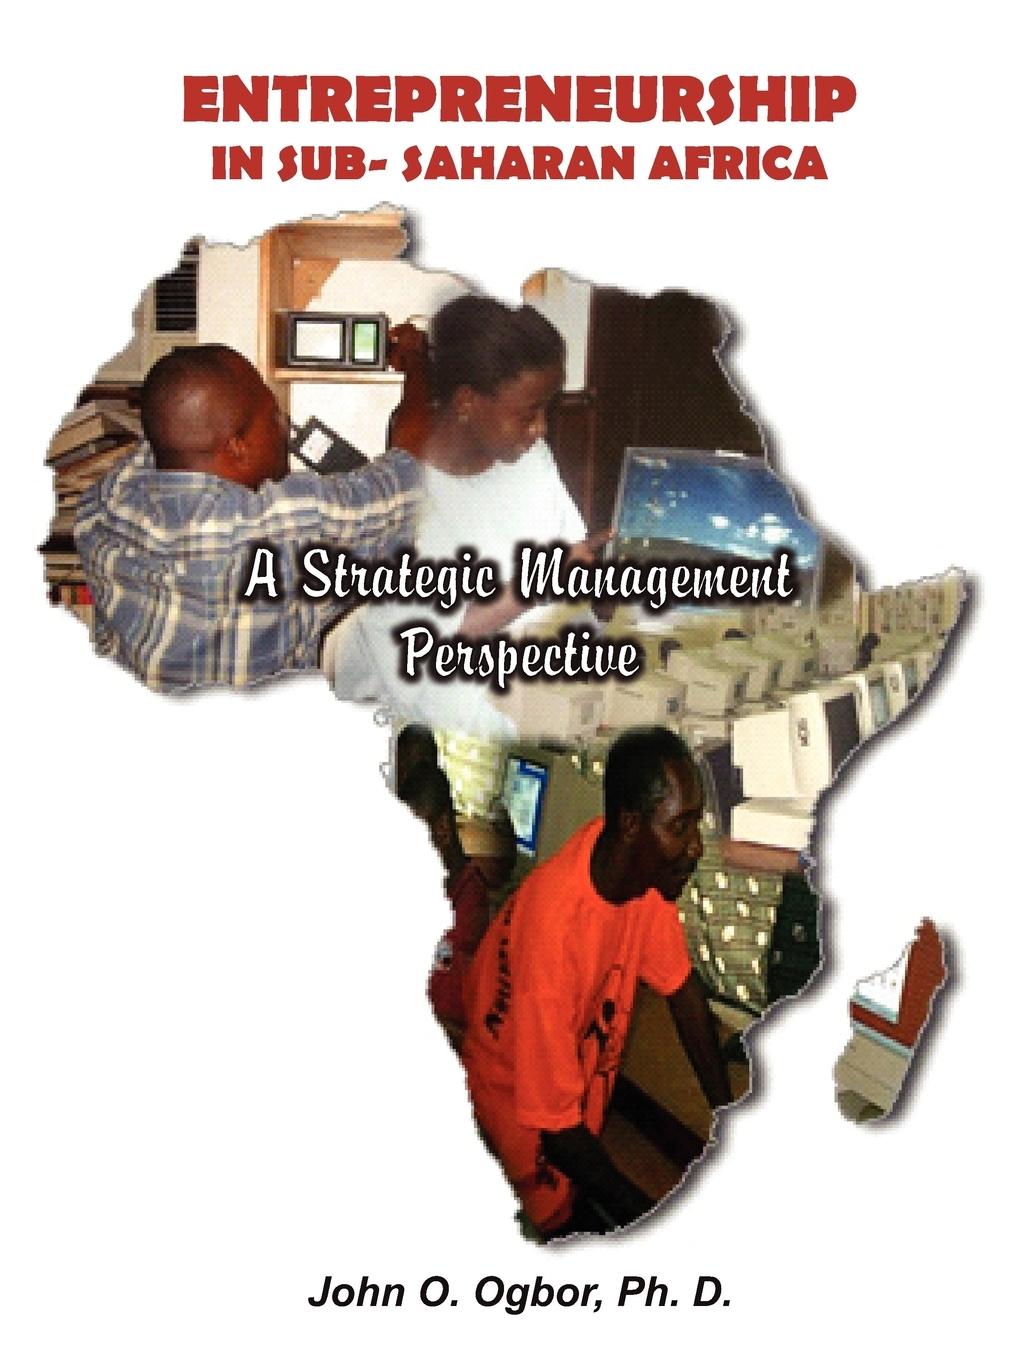 Entrepreneurship in Sub-Saharan Africa / A Strategic Management Perspective / Ph. D. John O. Ogbor / Taschenbuch / Paperback / Englisch / 2009 / AuthorHouse / EAN 9781438933924 - John O. Ogbor, Ph. D.